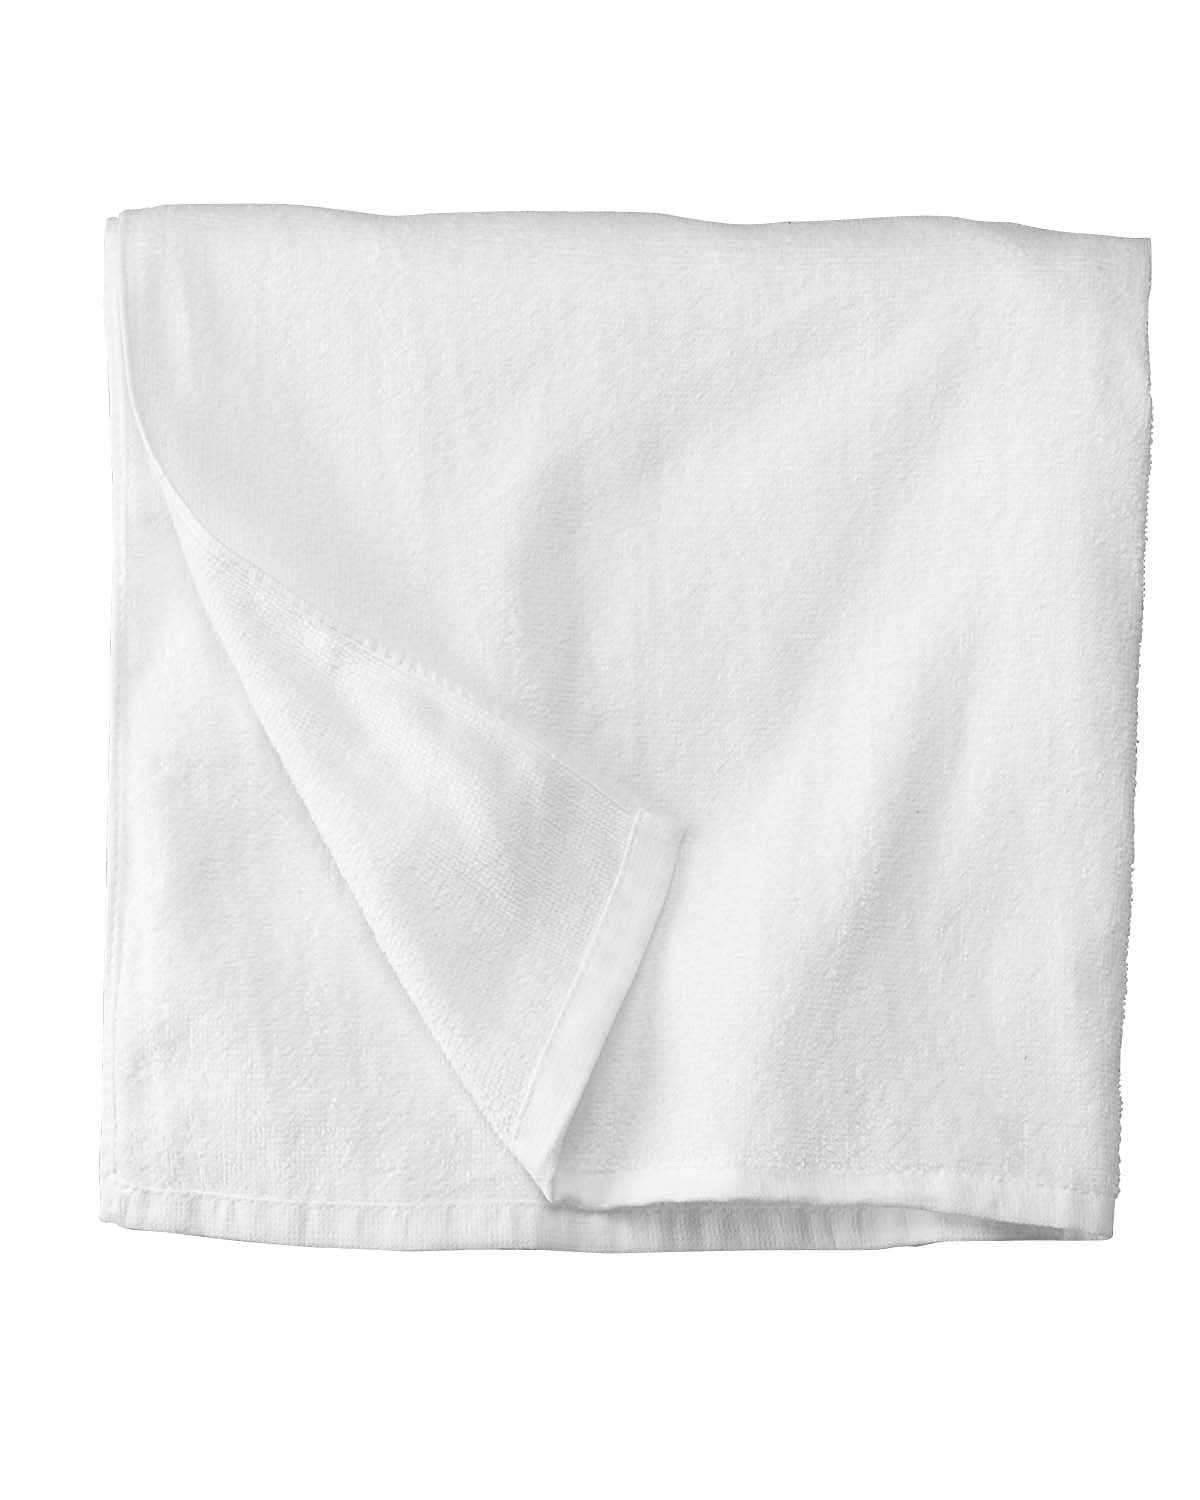 Carmel Towel Company C2858 Terry Beach Towel - White - HIT a Double - 1